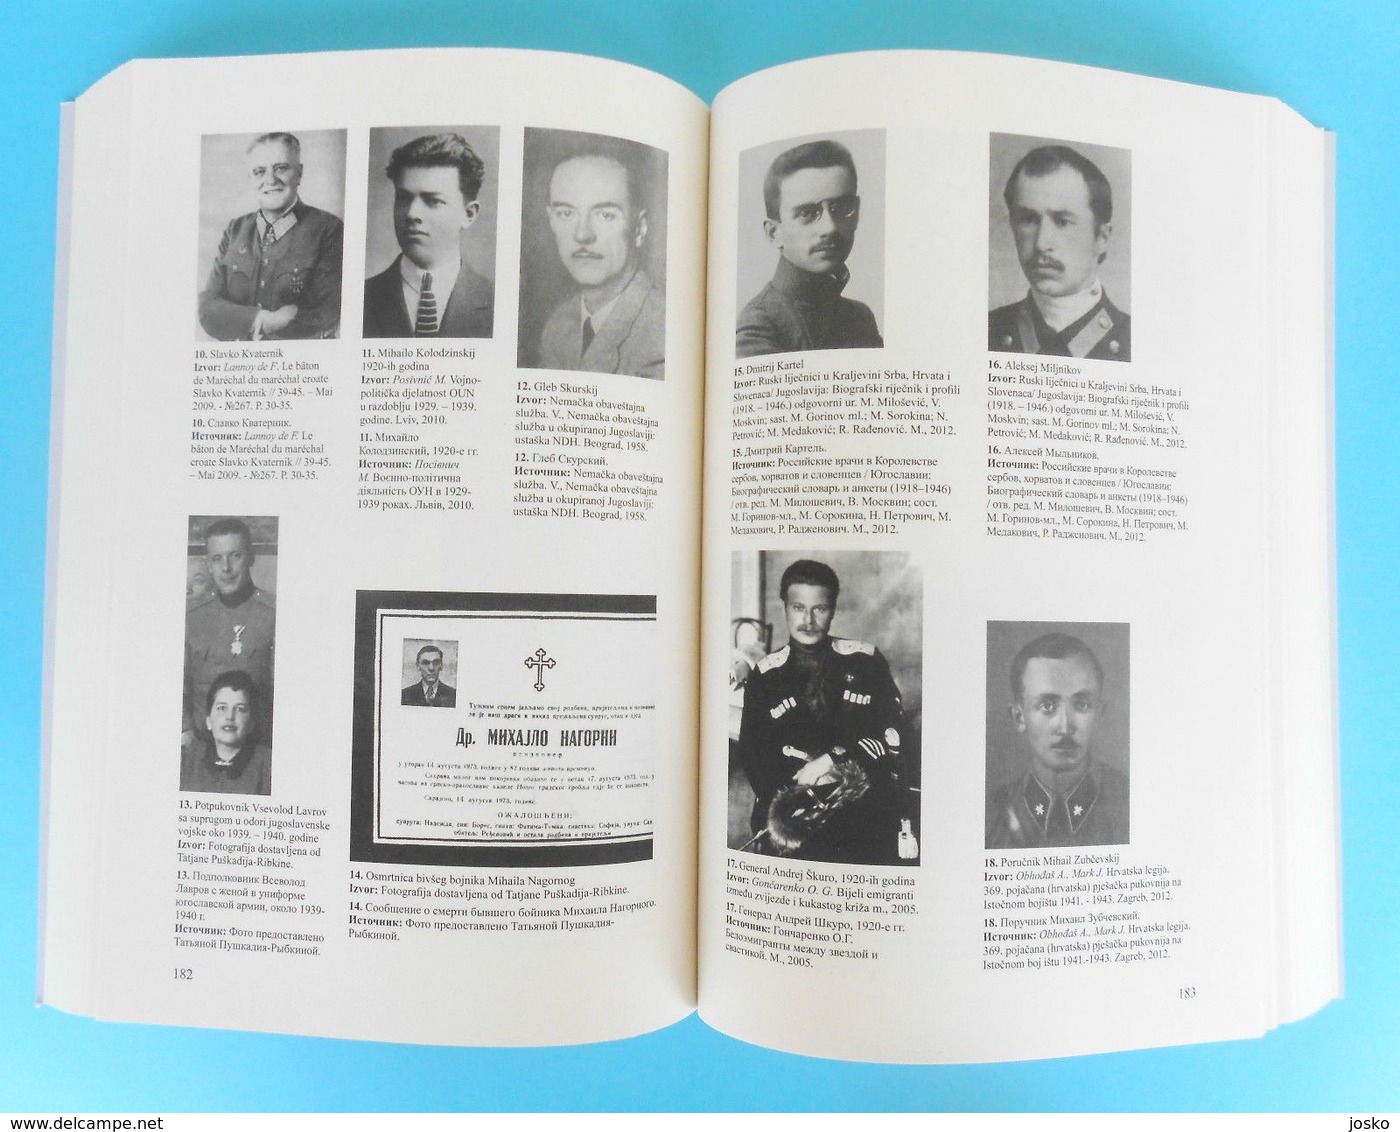 WW2 - RUSSIANS AND UKRAINIANS IN CROATIAN ARMY 1941-1945.* CROATIAN AND RUSSIAN * Mint book Hitler allies Russia Ukraine